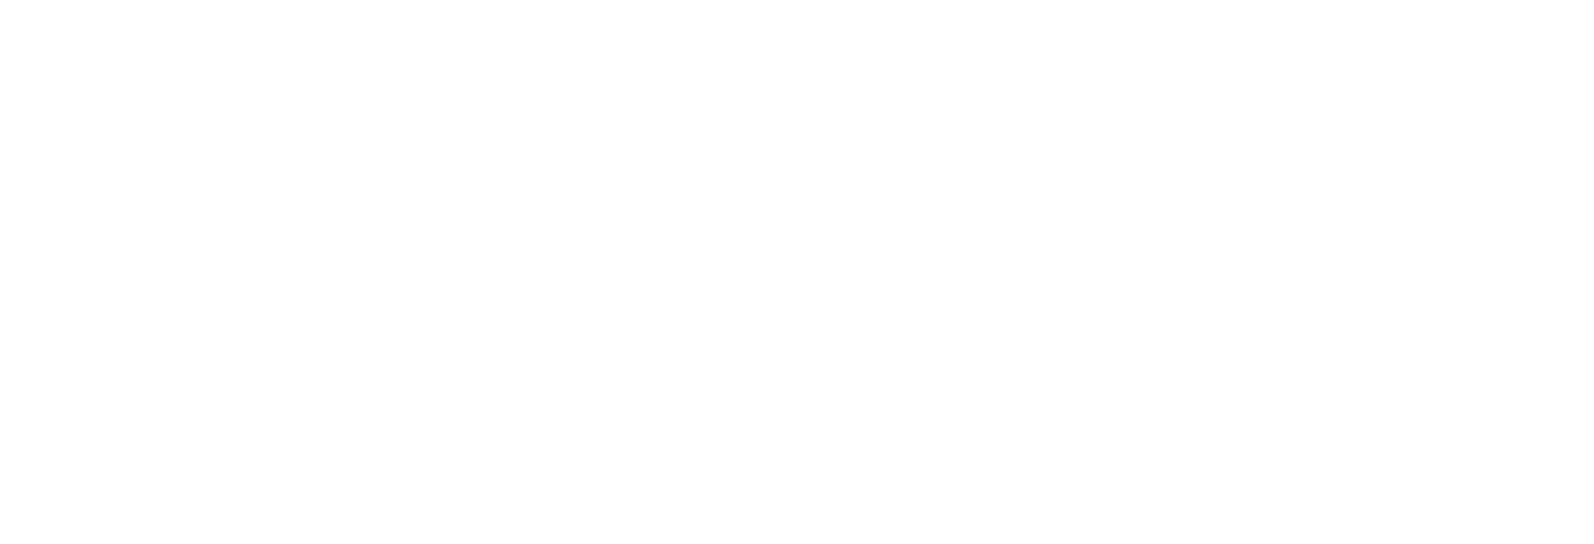 ContextLogic (wish.com) logo grand pour les fonds sombres (PNG transparent)